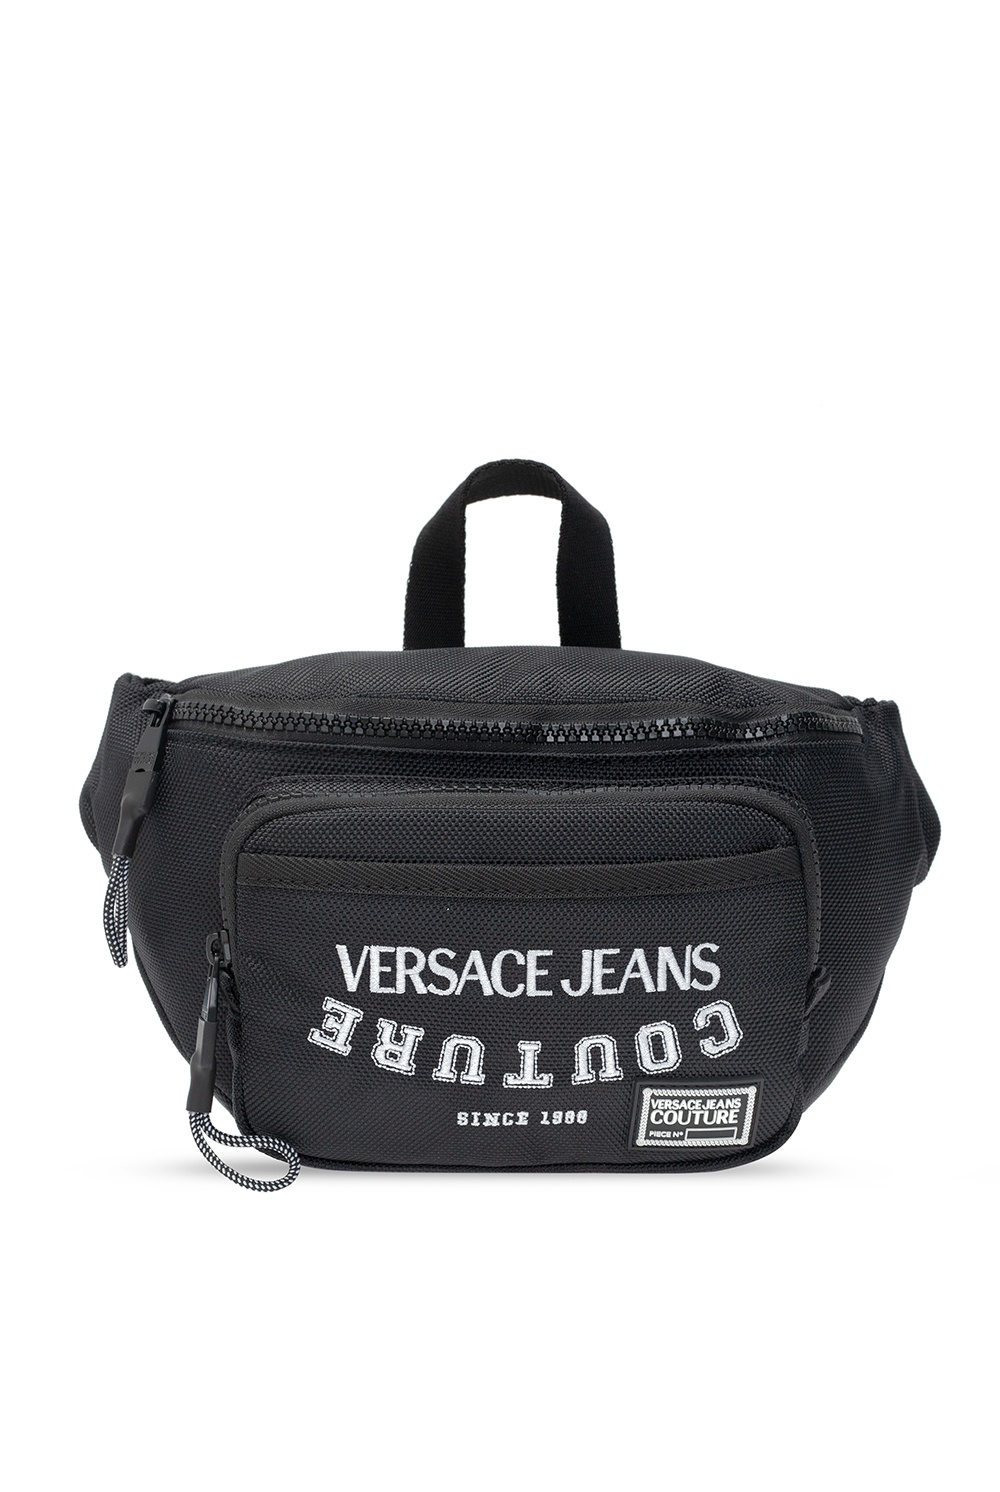 versace jeans logo bag